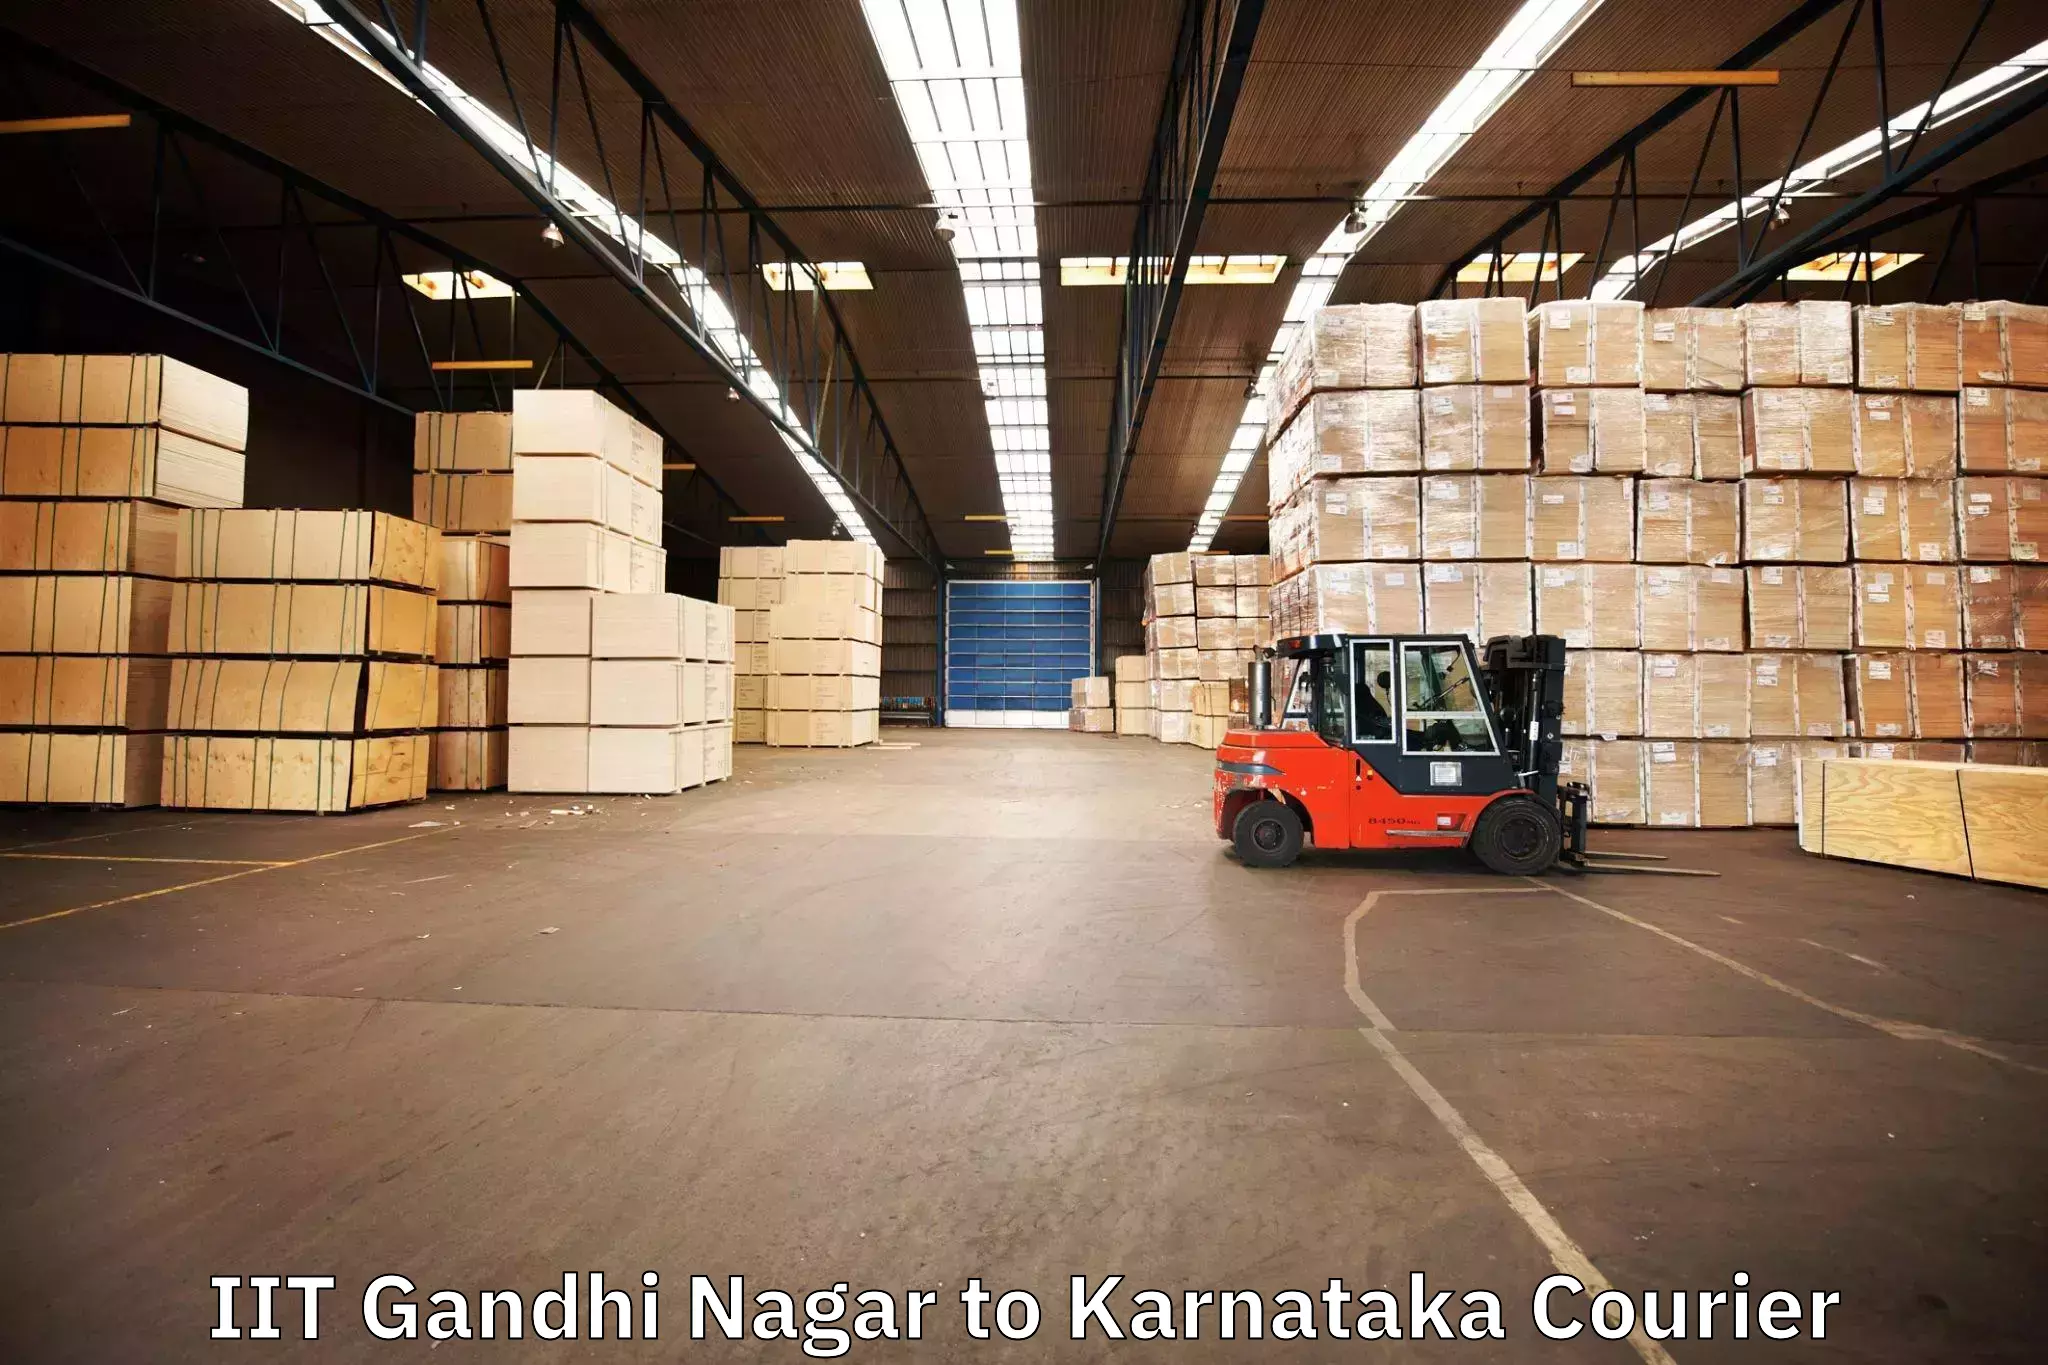 Trusted moving company IIT Gandhi Nagar to Chincholi